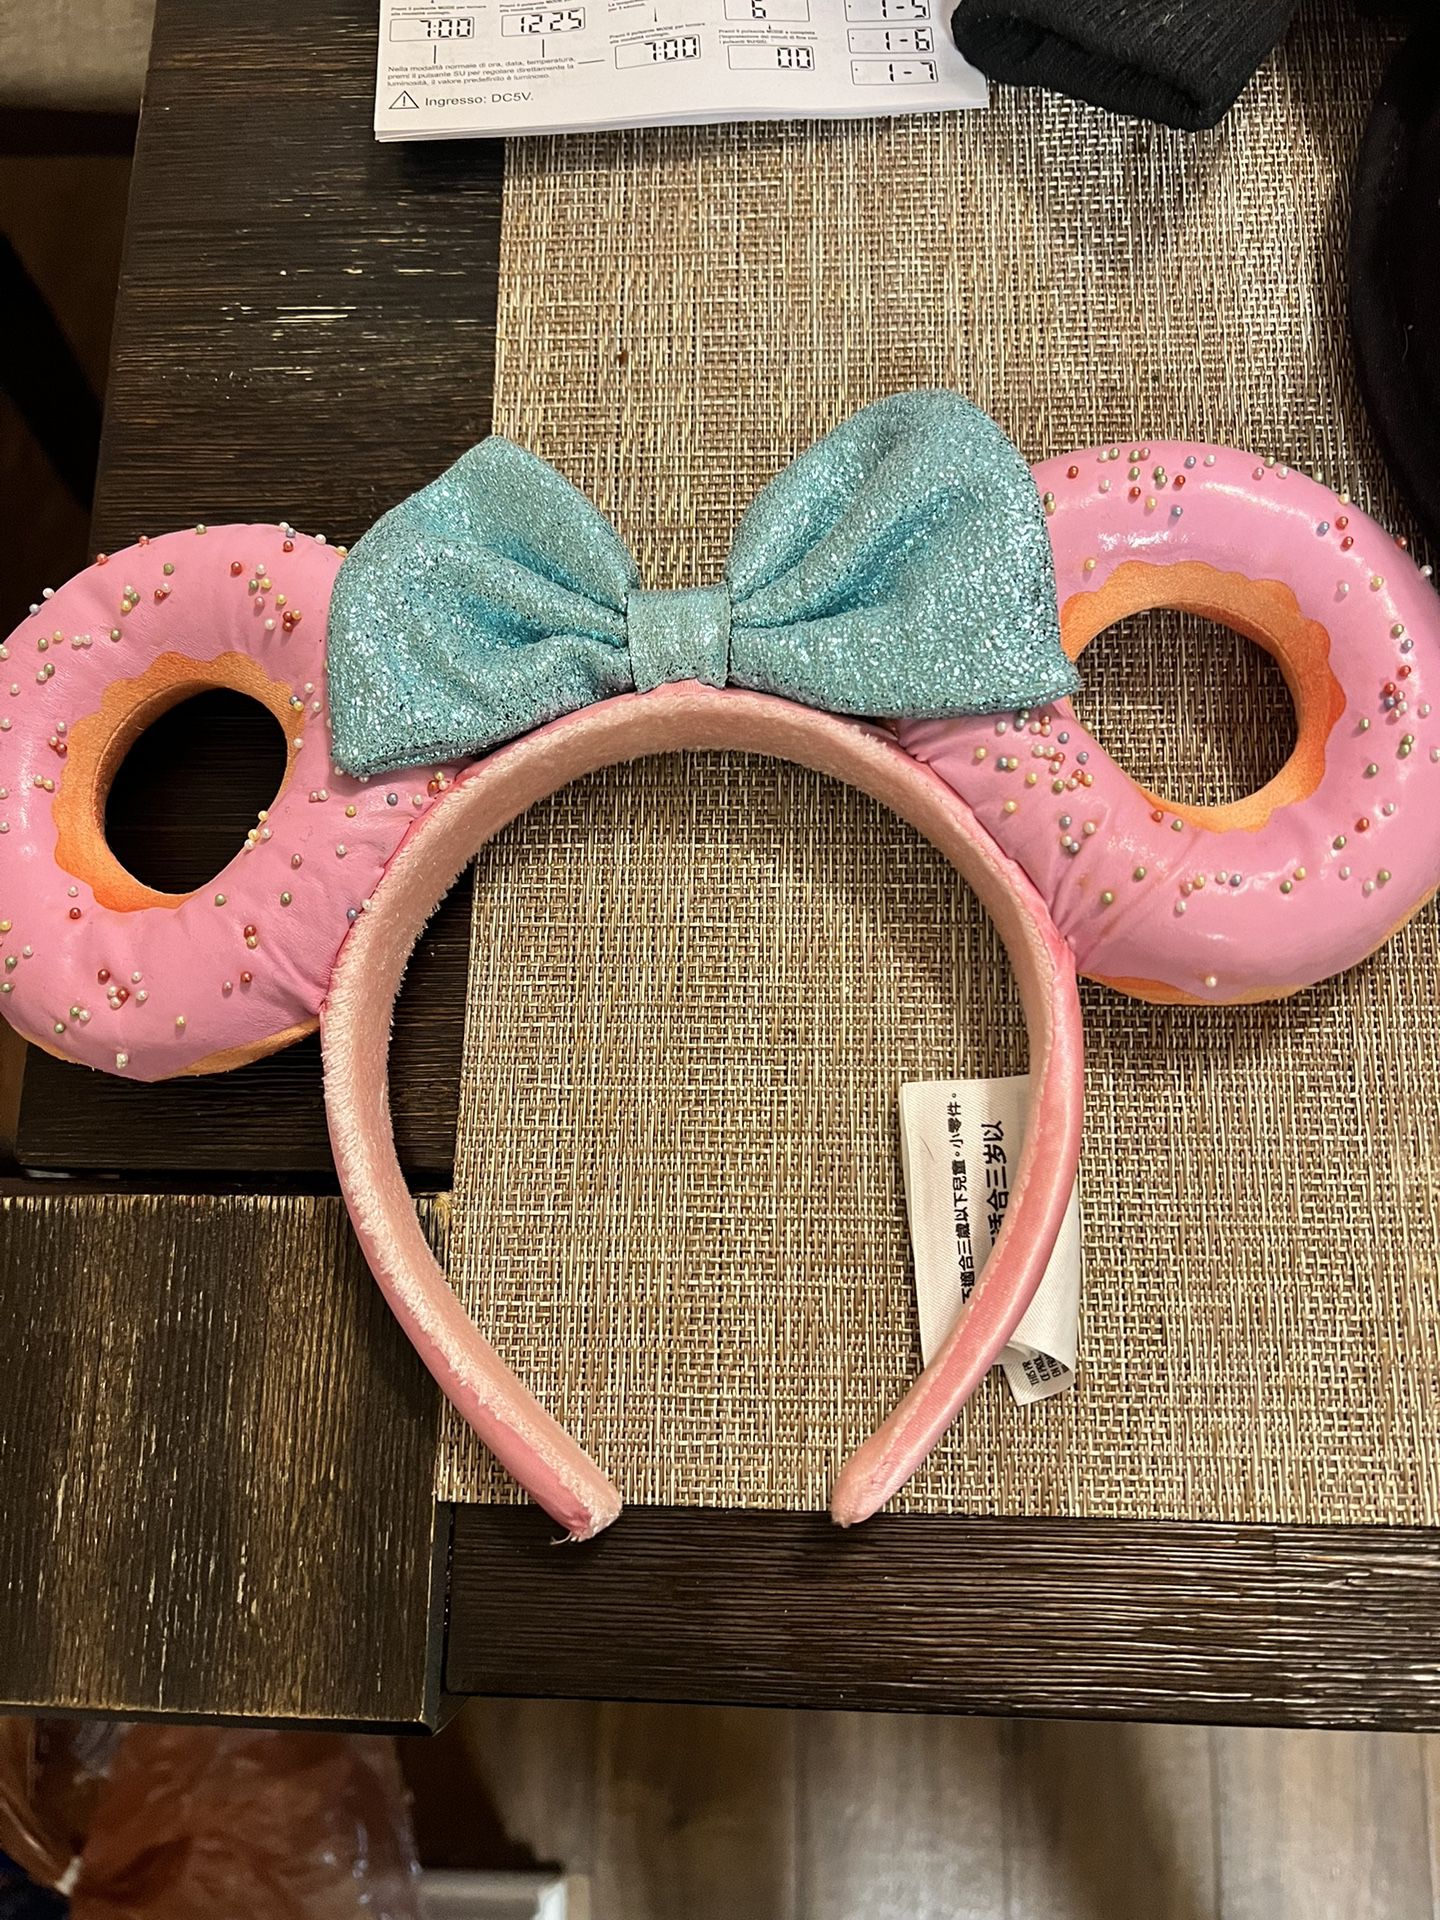 Minnie Mouse Donut Ears